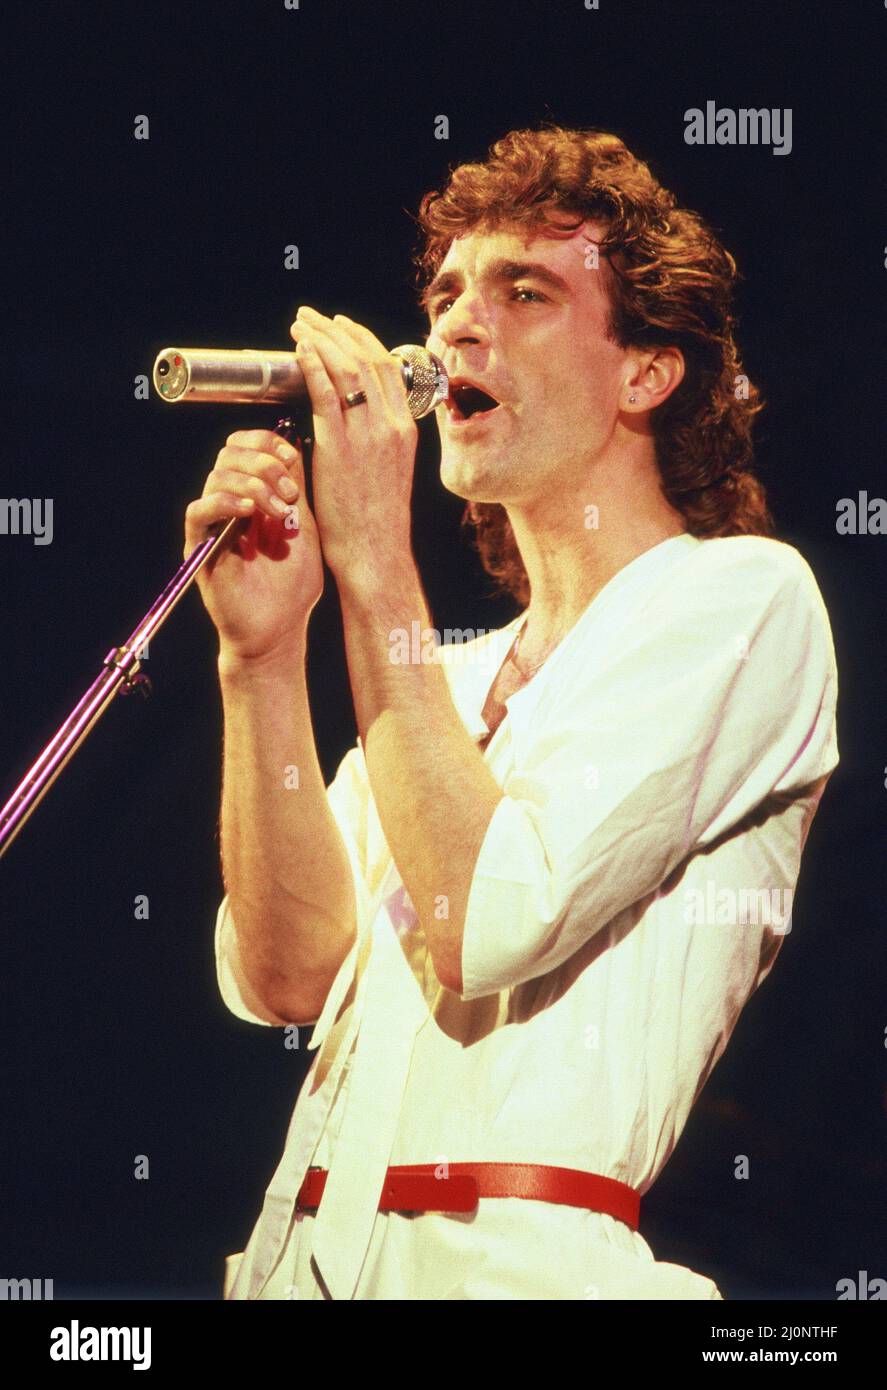 Canadian rock band Saga in concert at Hammersmith Odeon, singer Mike Sadler. 10th November 1983. Stock Photo